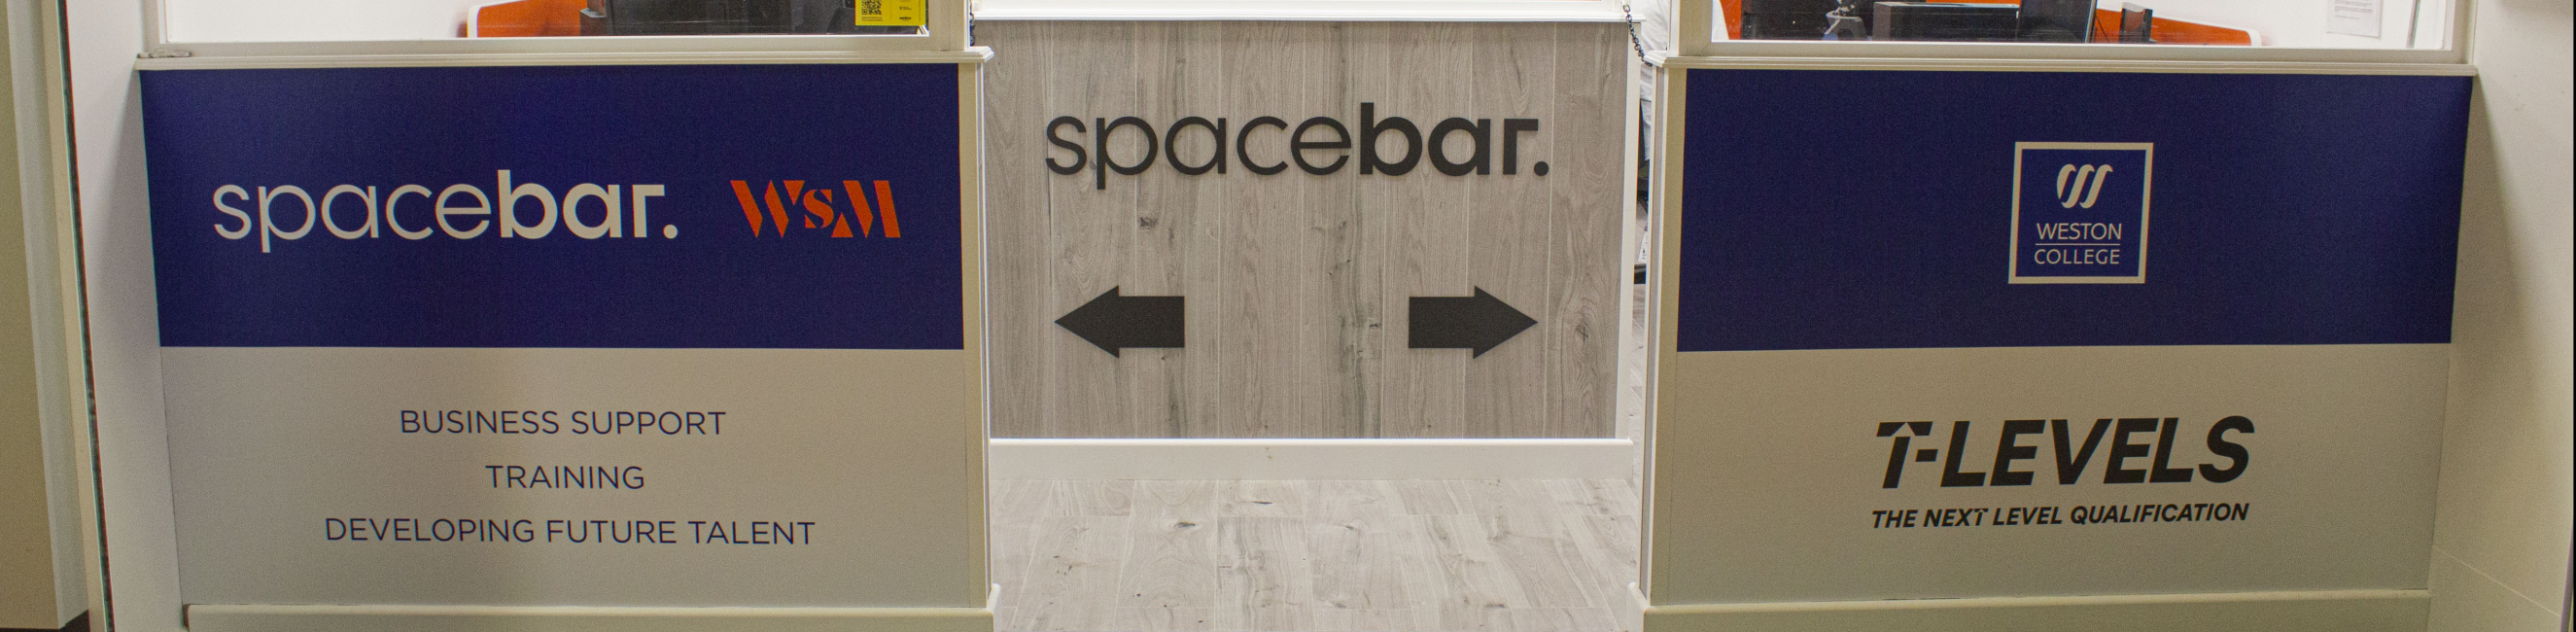 Spacebar entrance